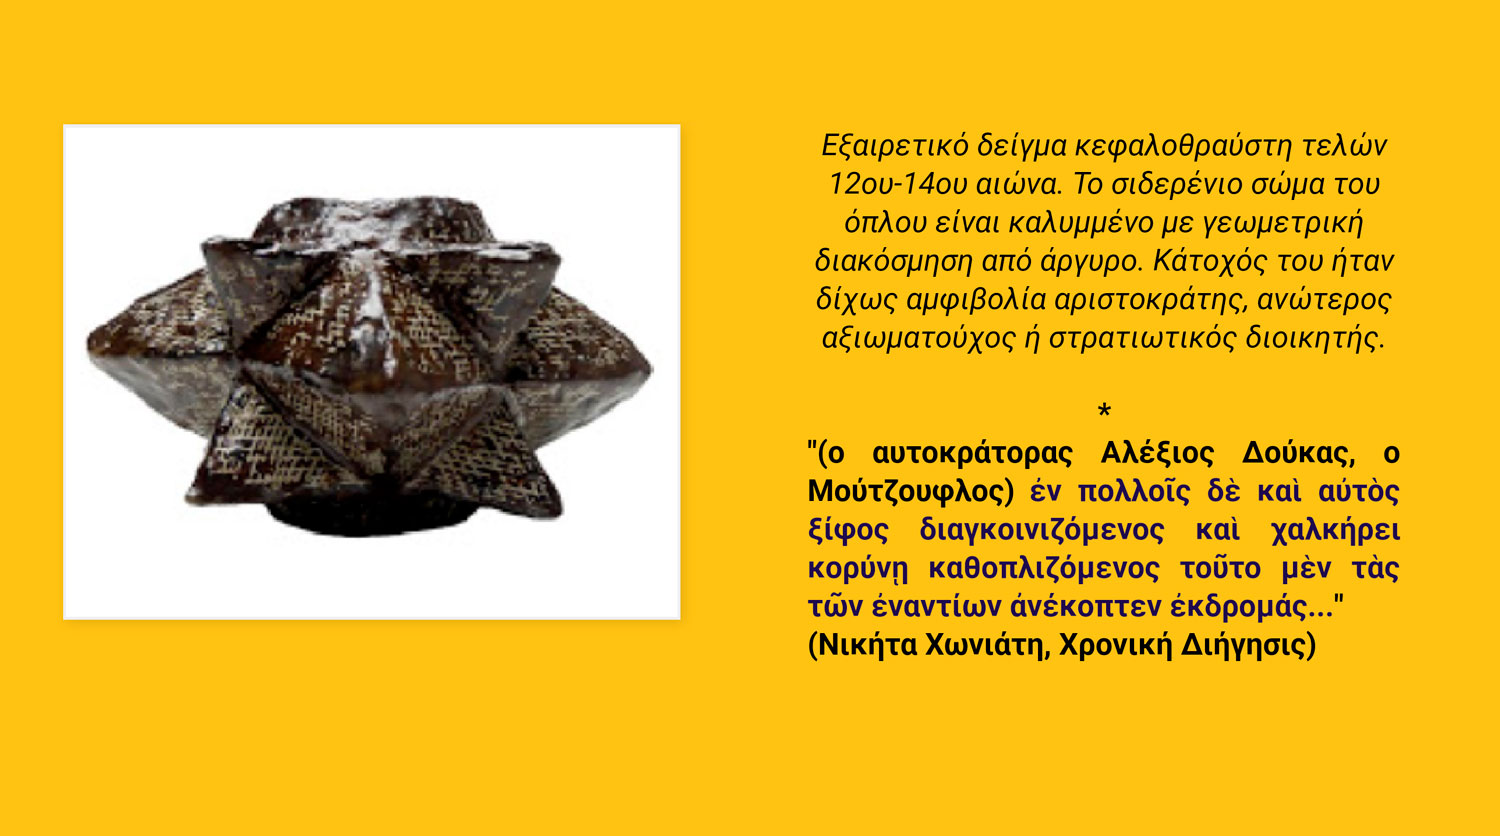 eyr†ma apostatikos anixneyths metallonrysoy spectrap deus byzantino kefalothraysth